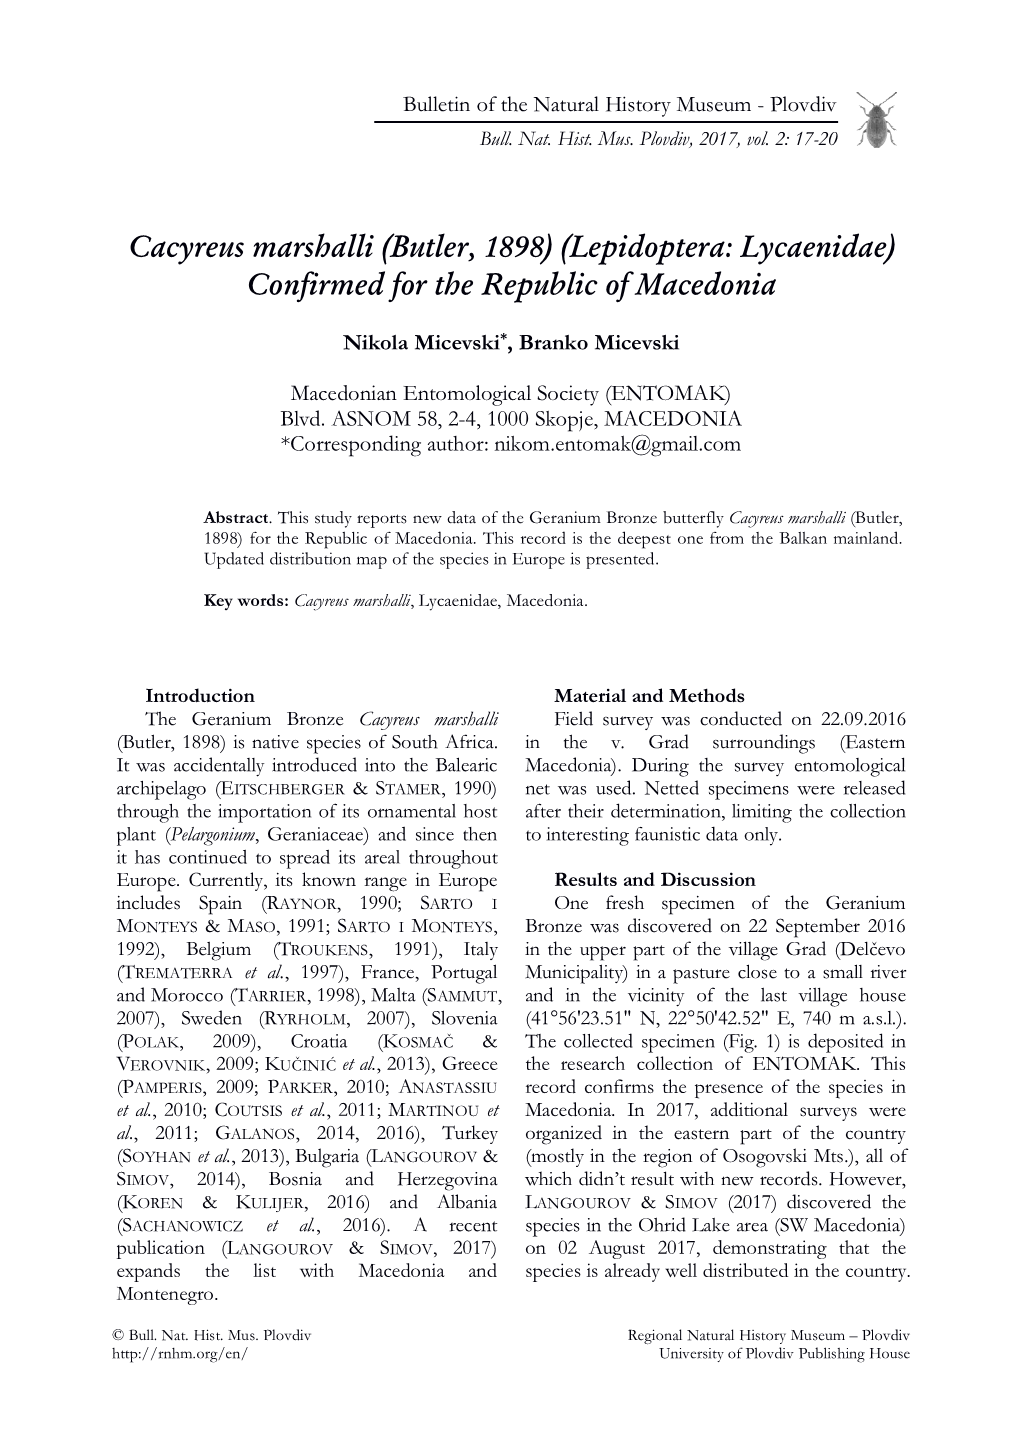 Cacyreus Marshalli (Butler, 1898) (Lepidoptera: Lycaenidae) Confirmed for the Republic of Macedonia